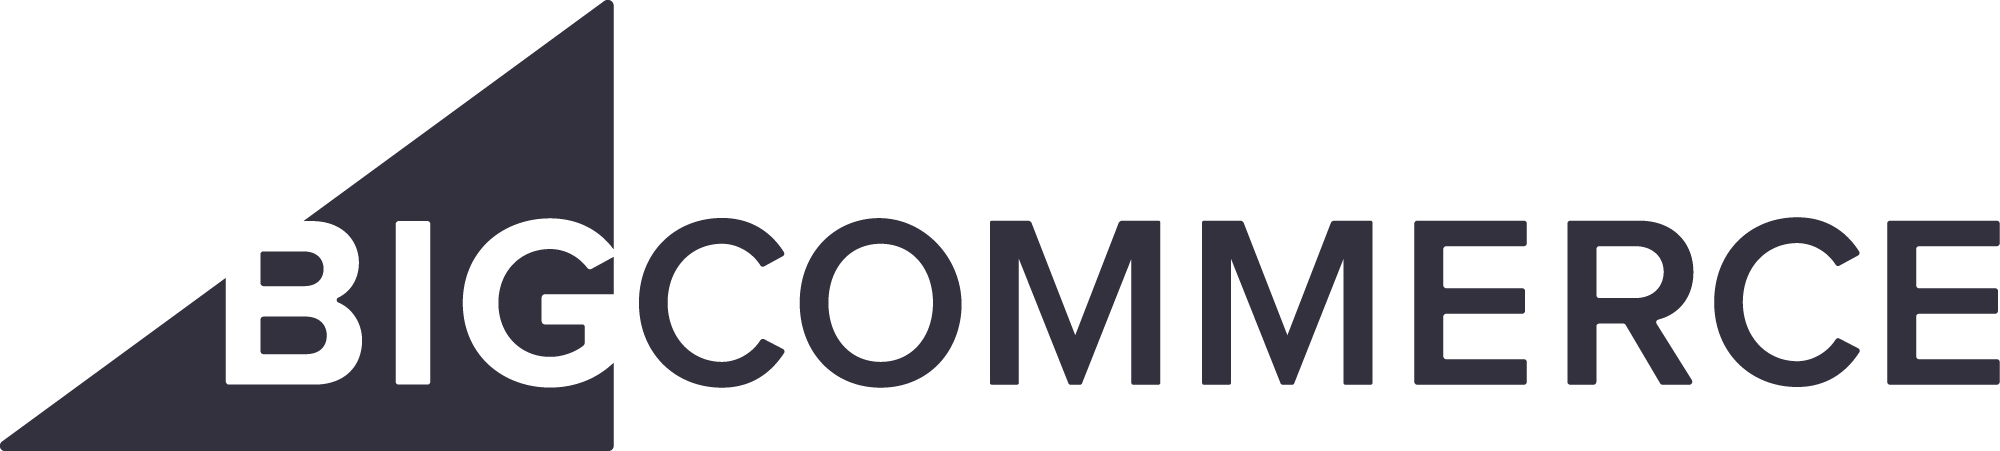 BigCommerce-logo-dark-2